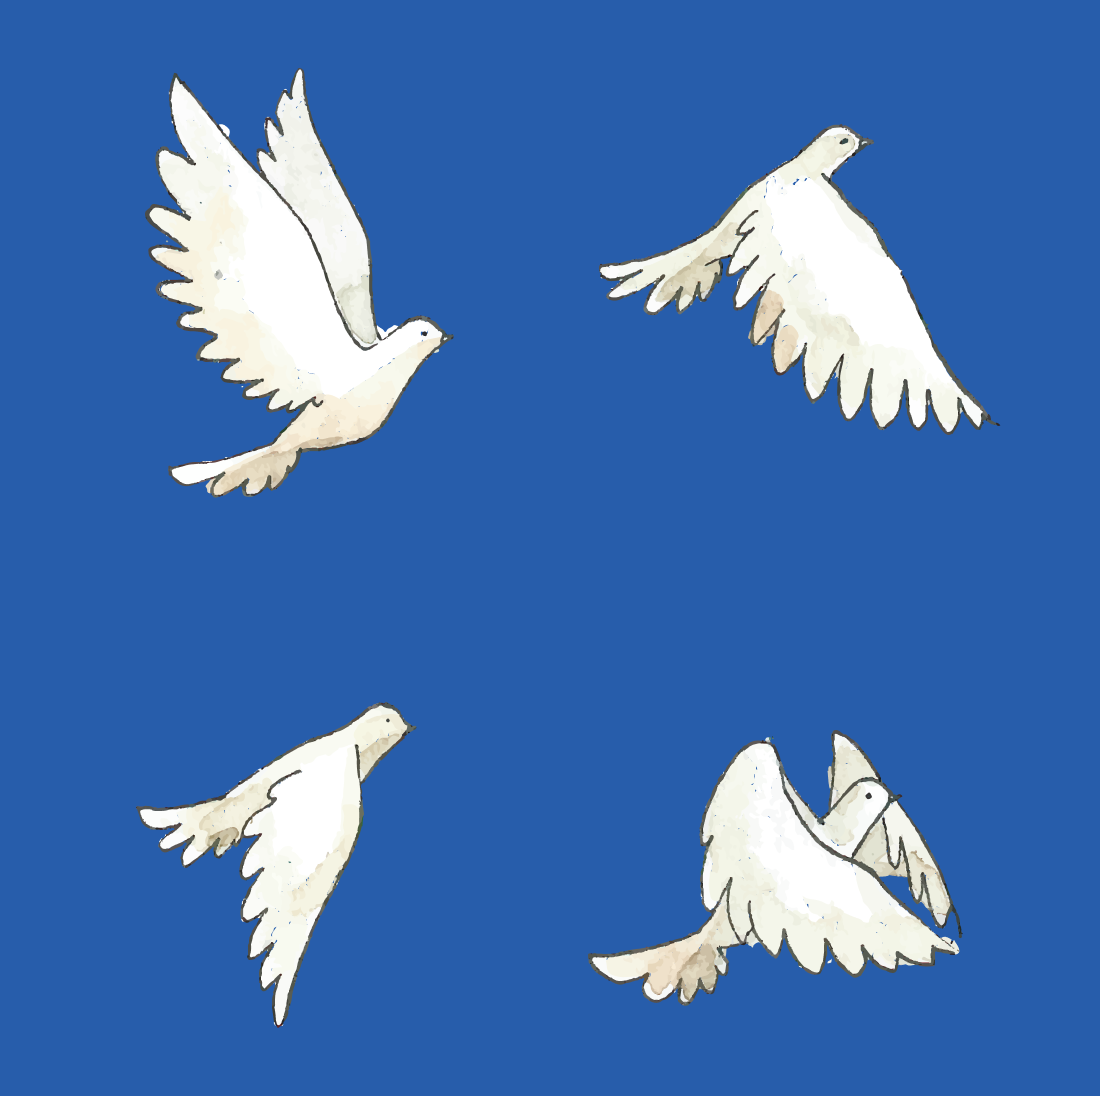 Four white doves flying in a blue sky.